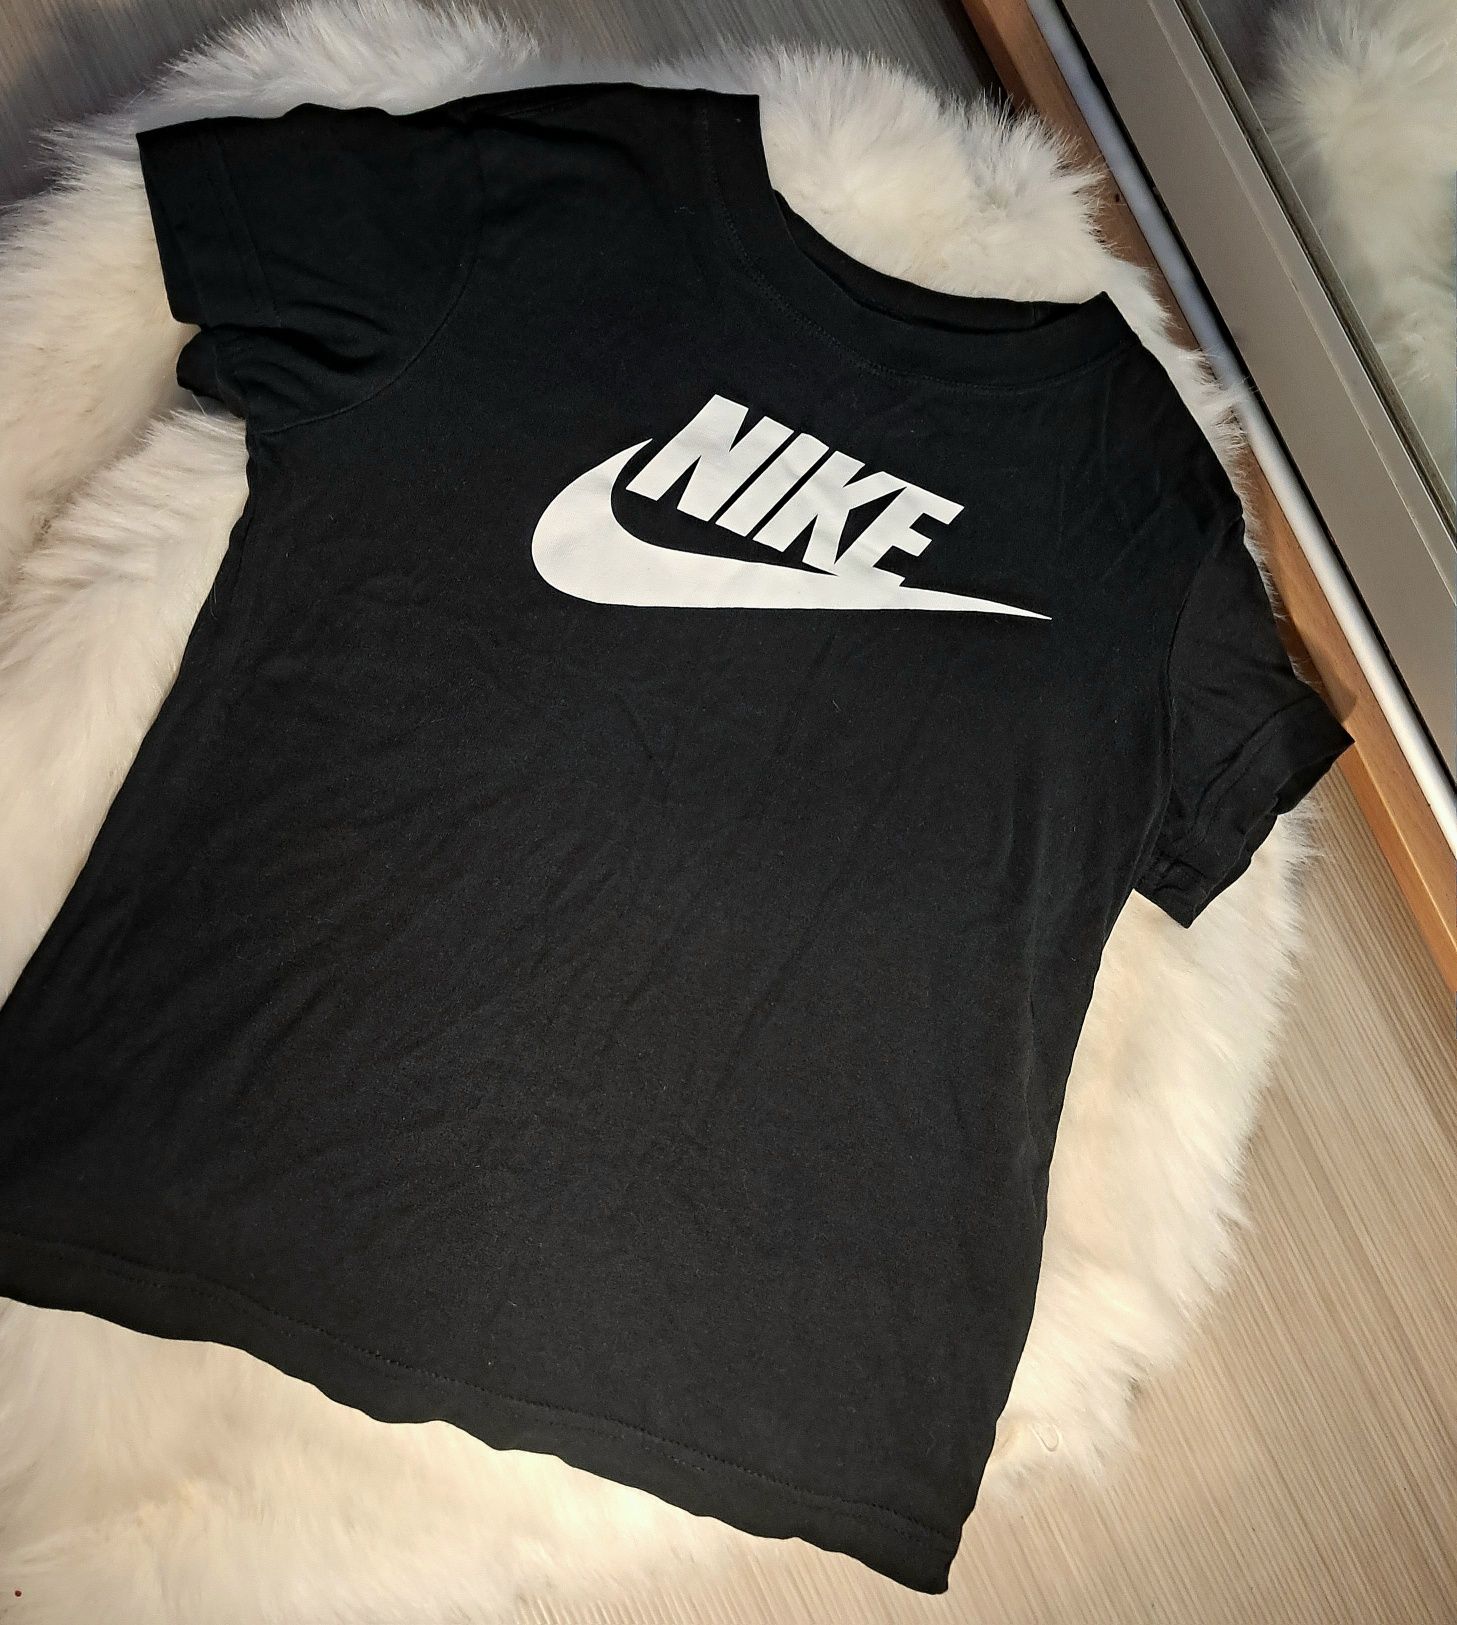 Женская футболка Nike